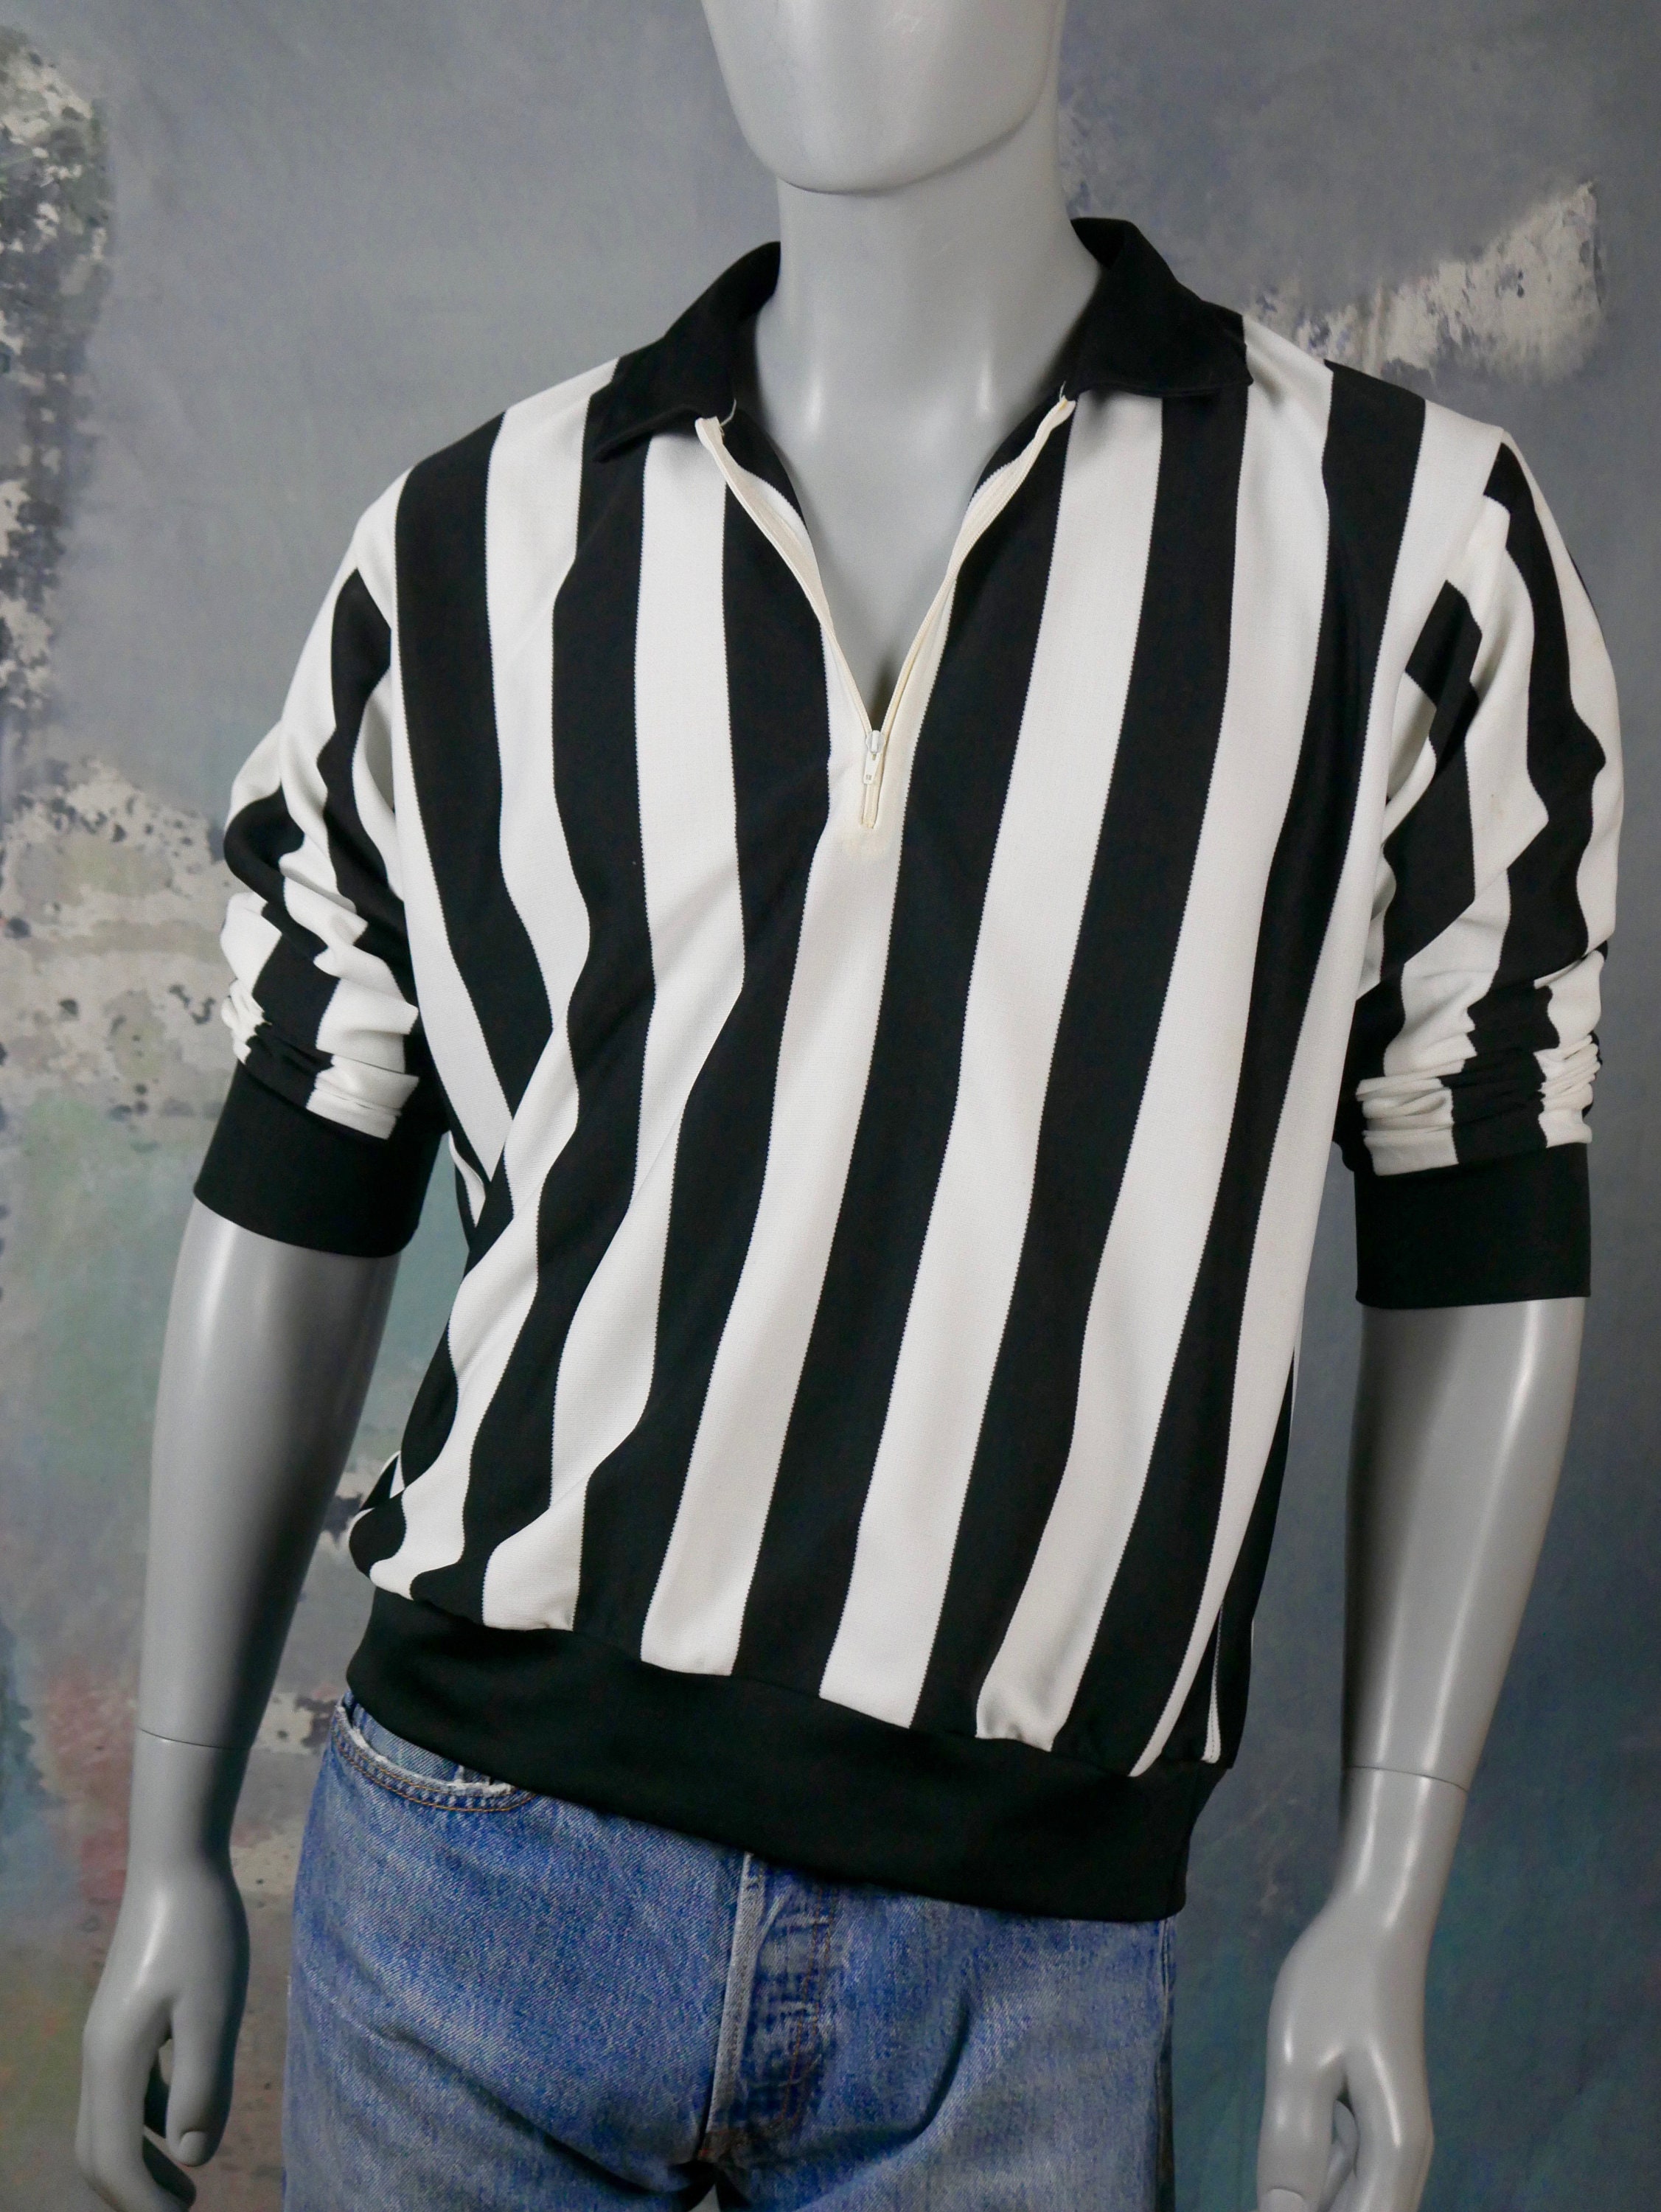 Referee Shirt 1990s Swedish Vintage Black & White Striped | Etsy